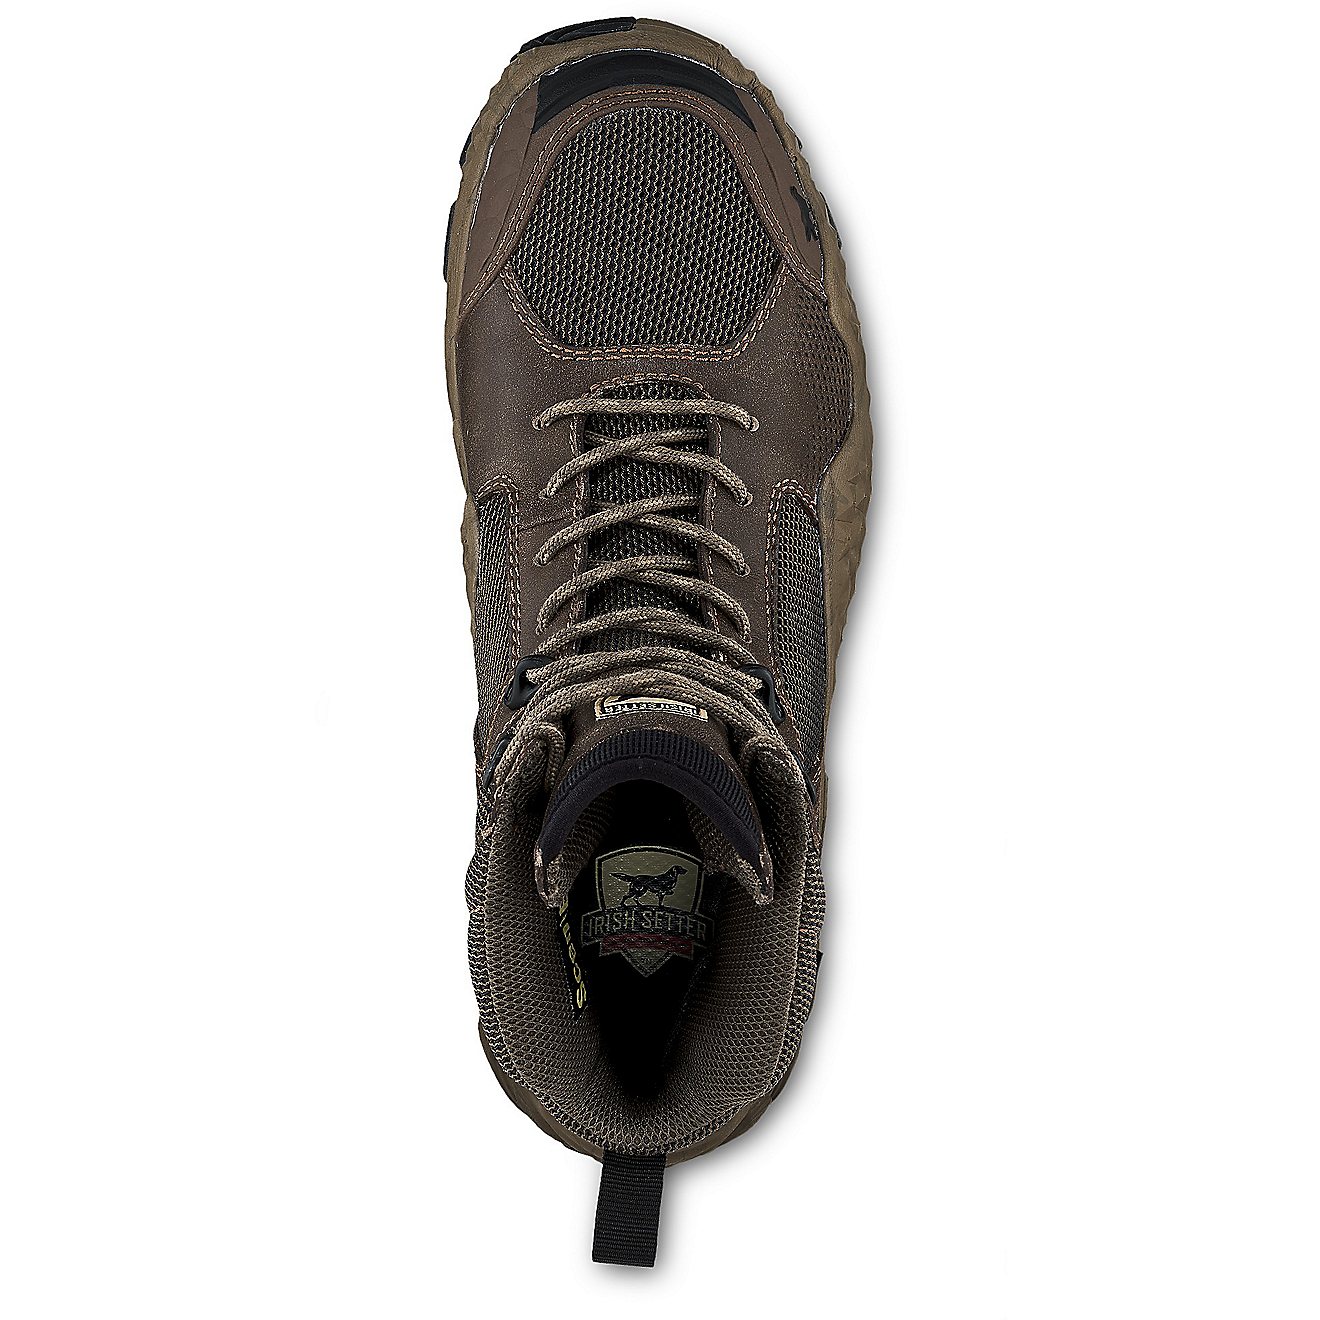 Irish Setter Men's VaprTrek 2830 Waterproof Leather Hiking Boots                                                                 - view number 4